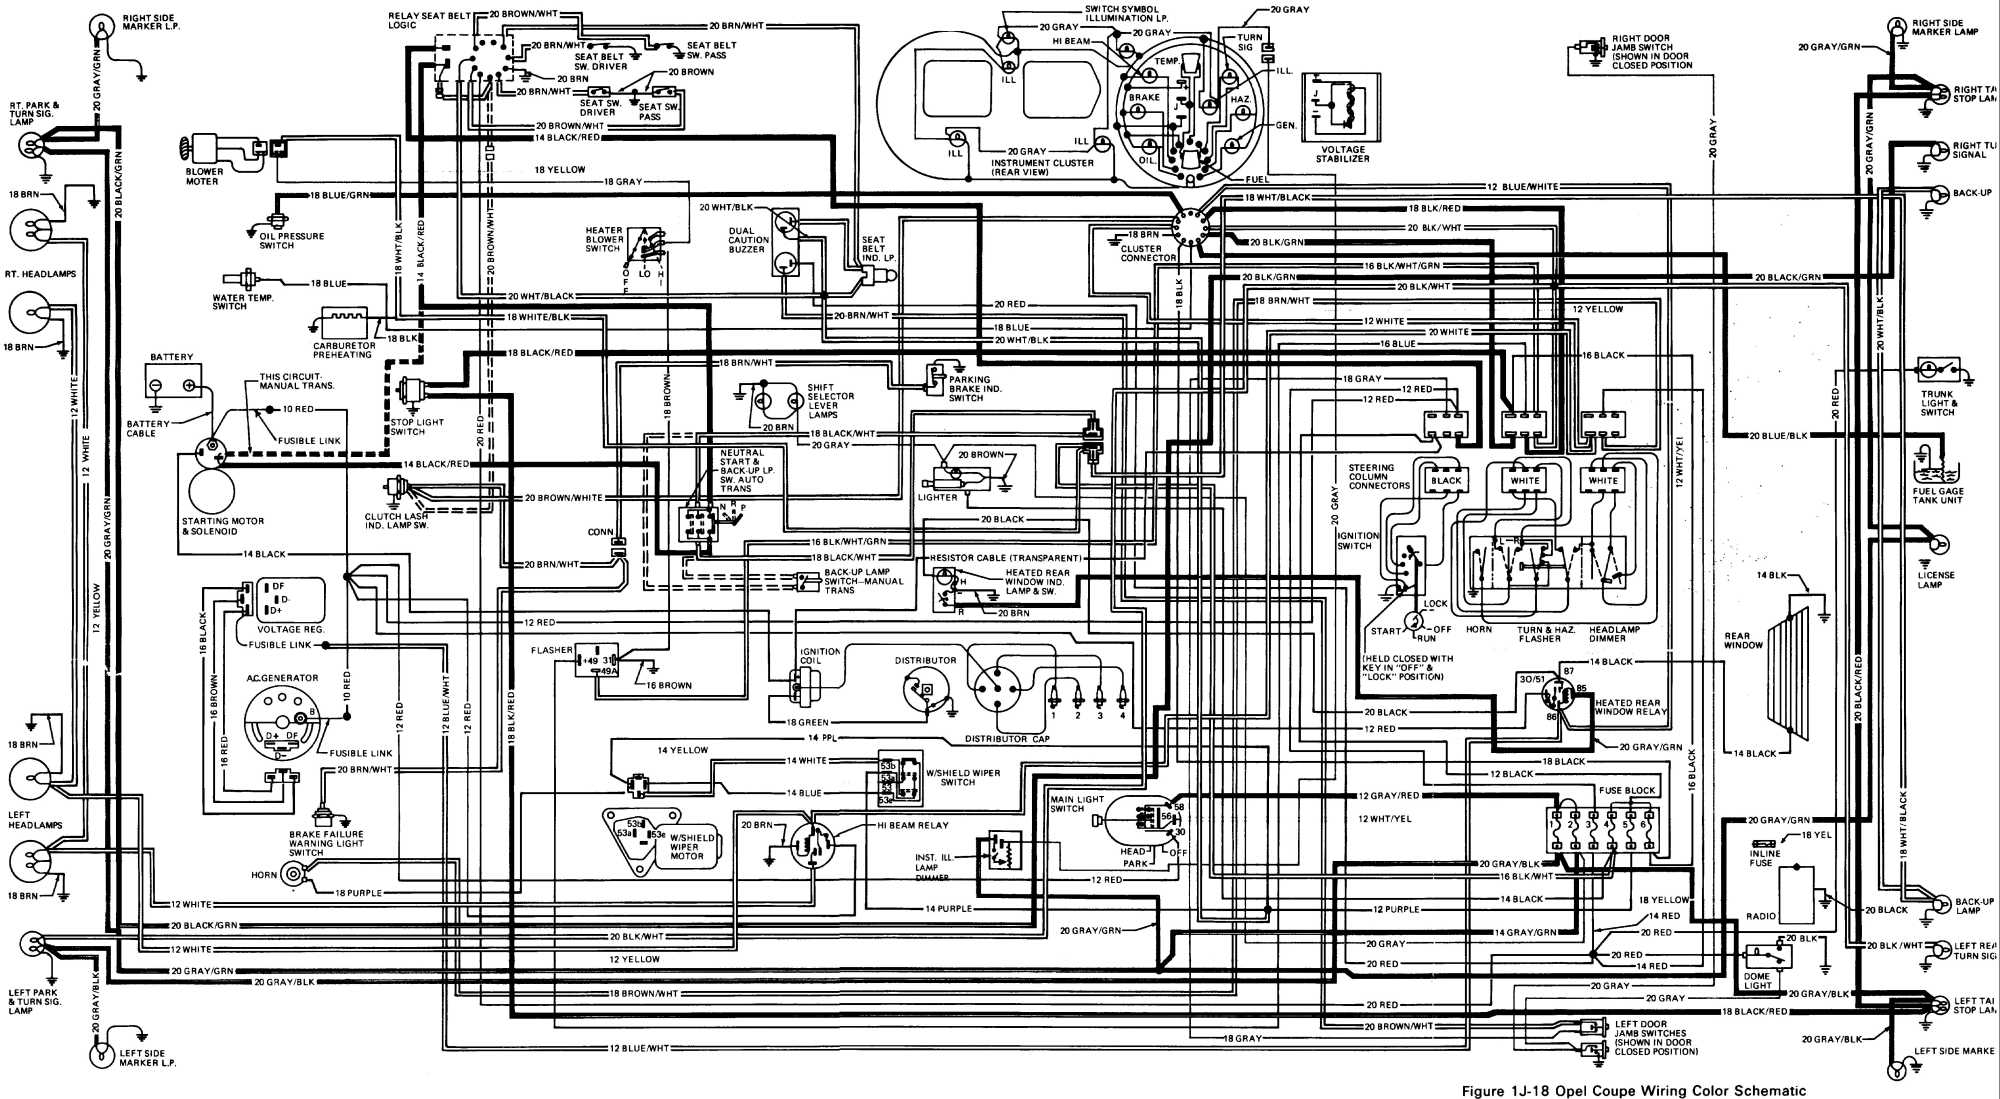 Opel Corsa B Wiring Diagram Pdf - Wiring Diagram Virtual ... opel kadett gsi wiring diagram 